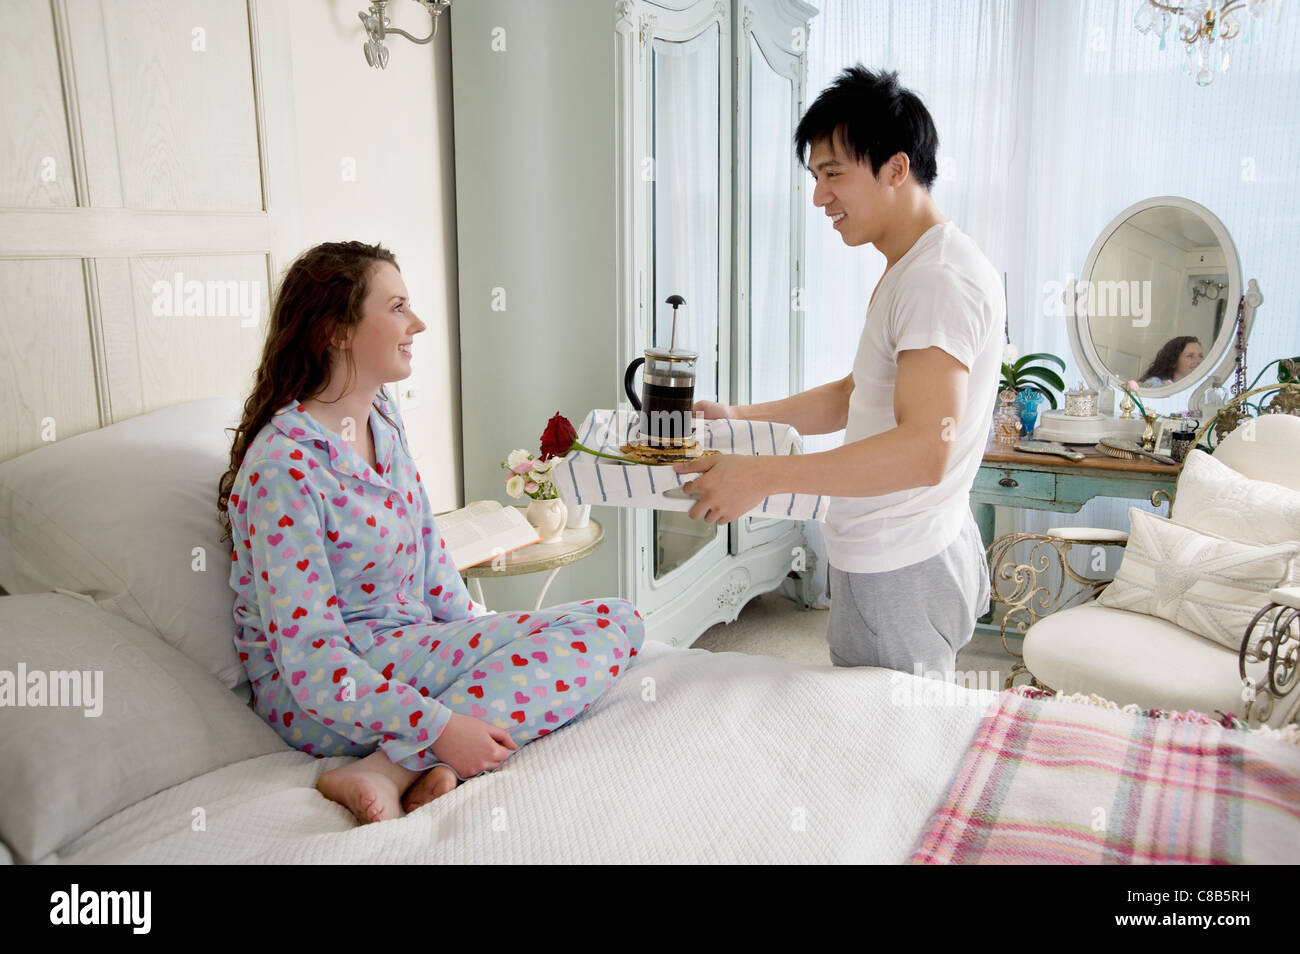 Mann Frau Frühstück im Bett zu bringen Stockfoto